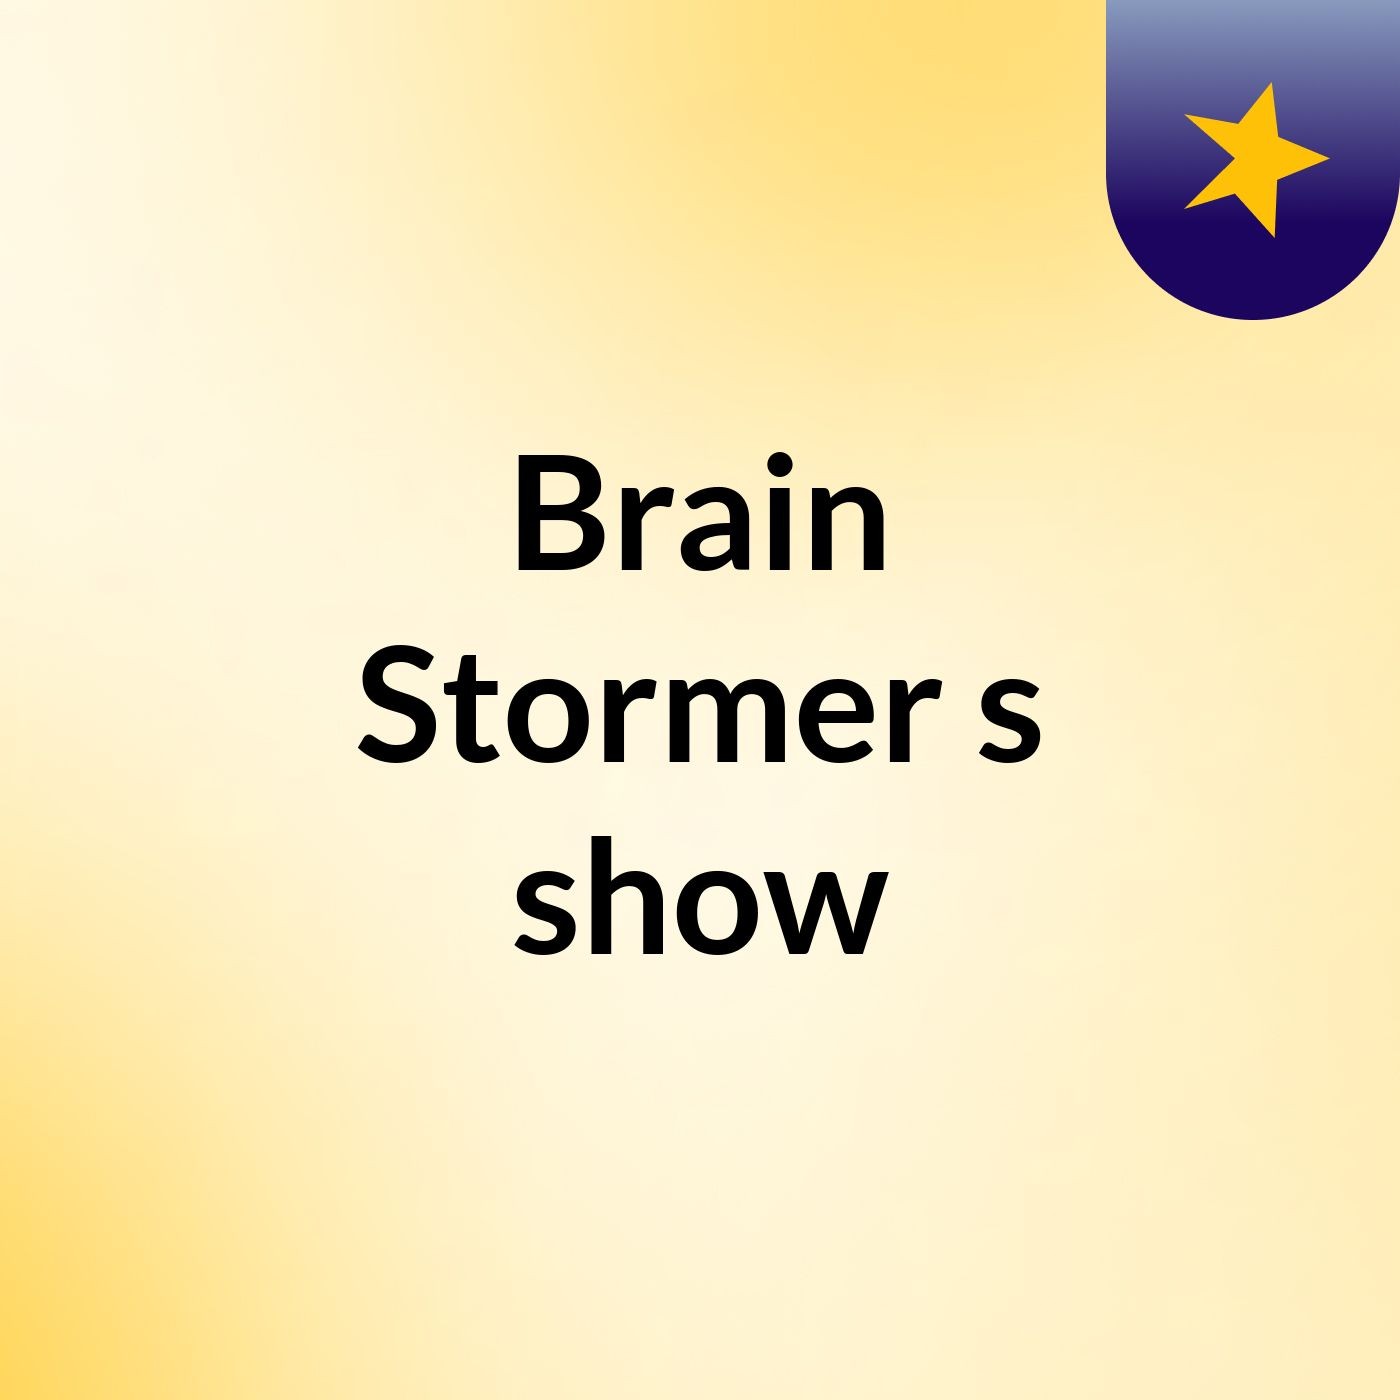 Brain Stormer's show